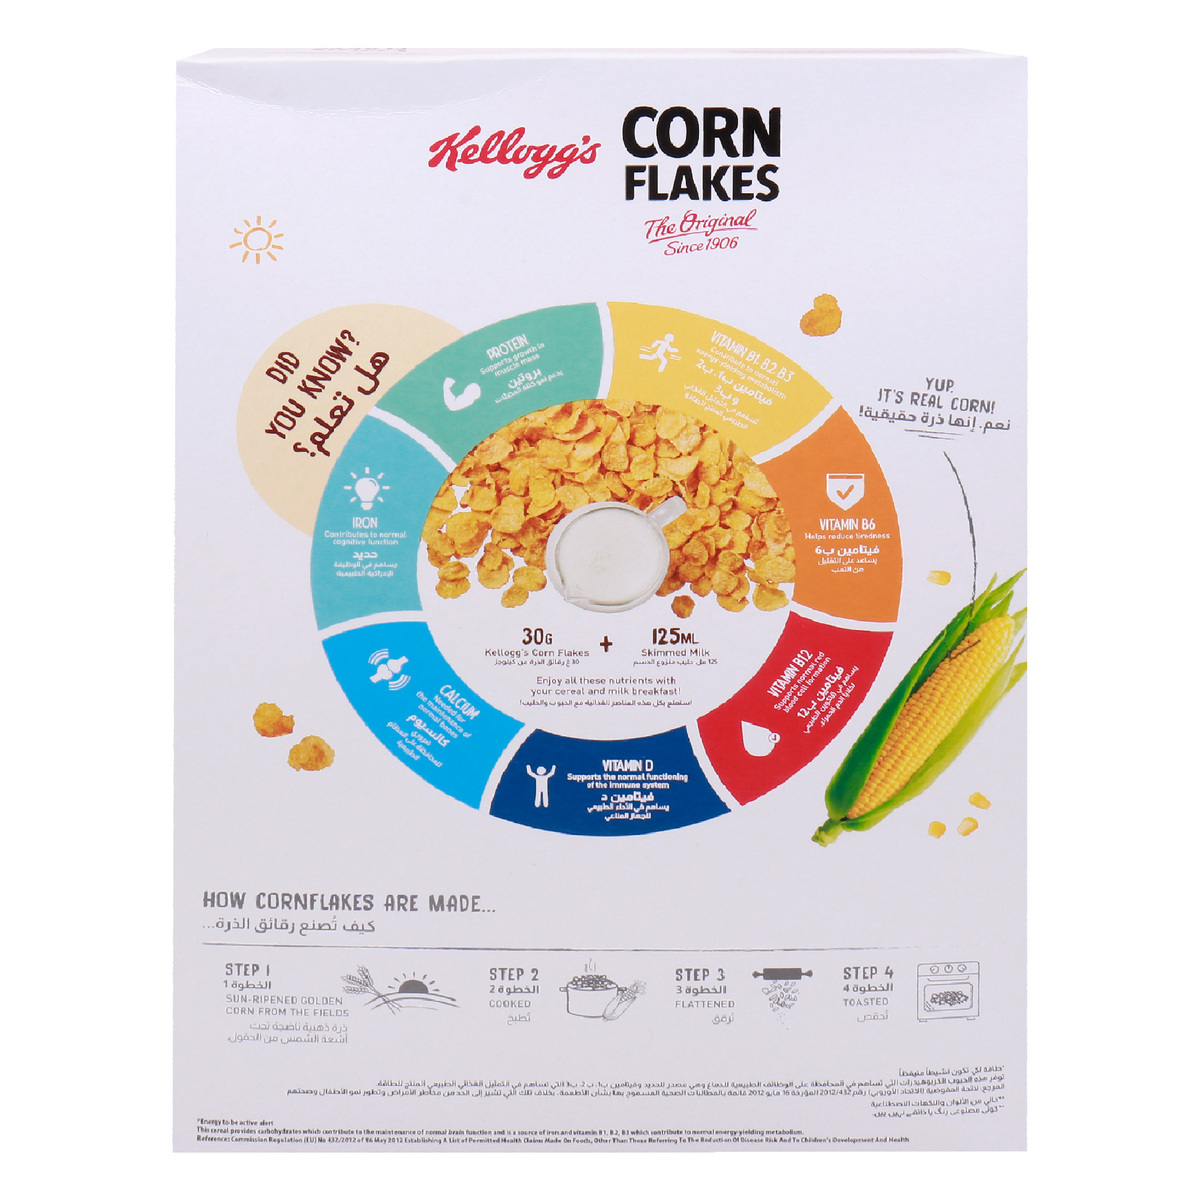 Kellogg's Corn Flakes Value Pack 750 g